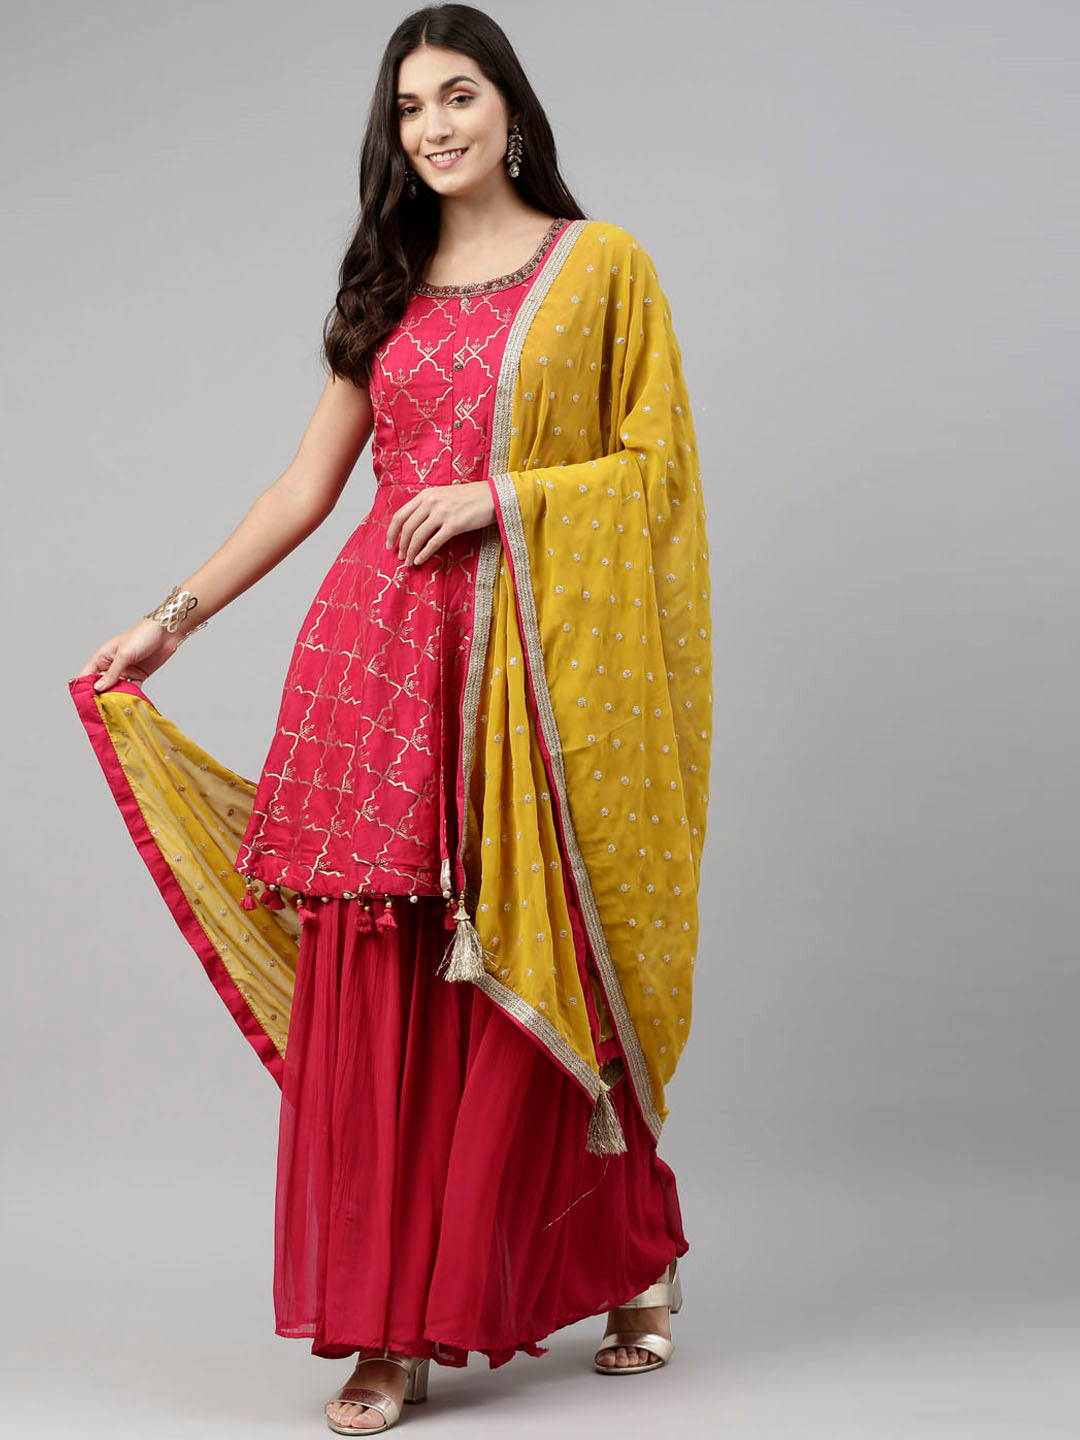 Neeru's Rani Color Banaras Fabric Suit-Short Anarkali